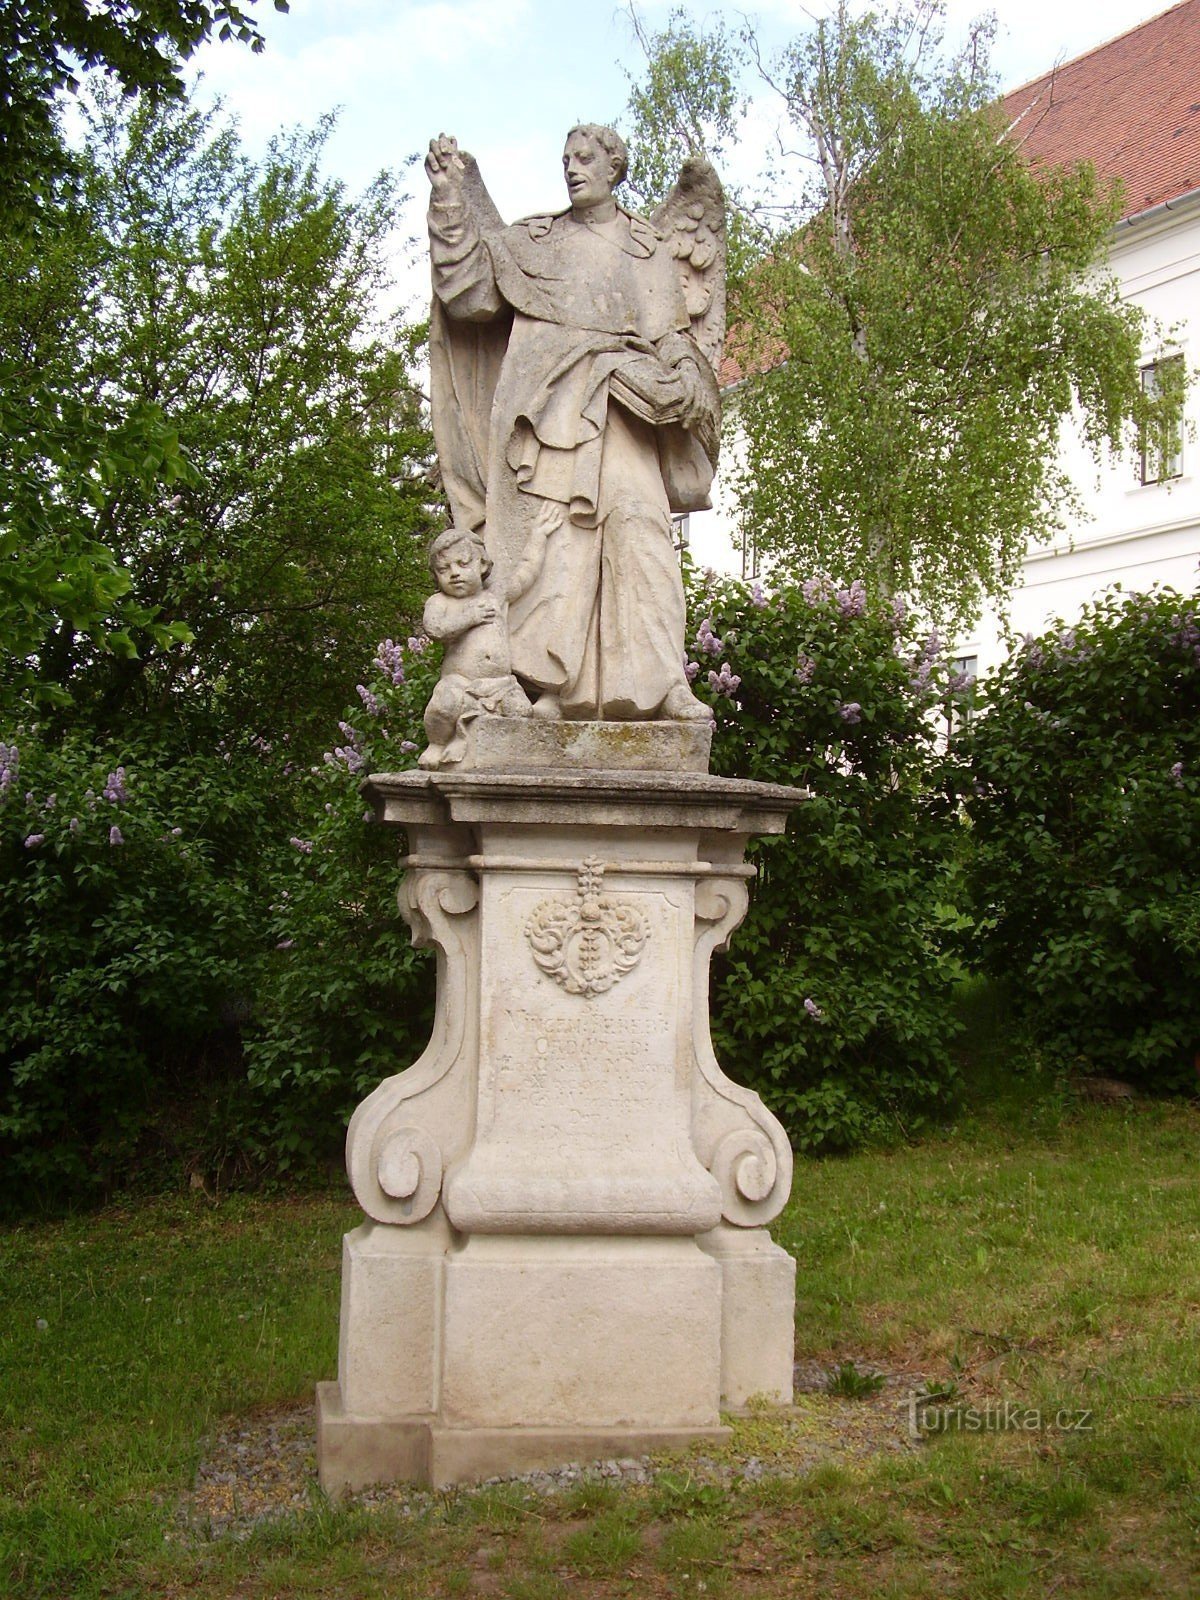 Statue of St. Vincenzo Ferrerský in Rosice near Brno